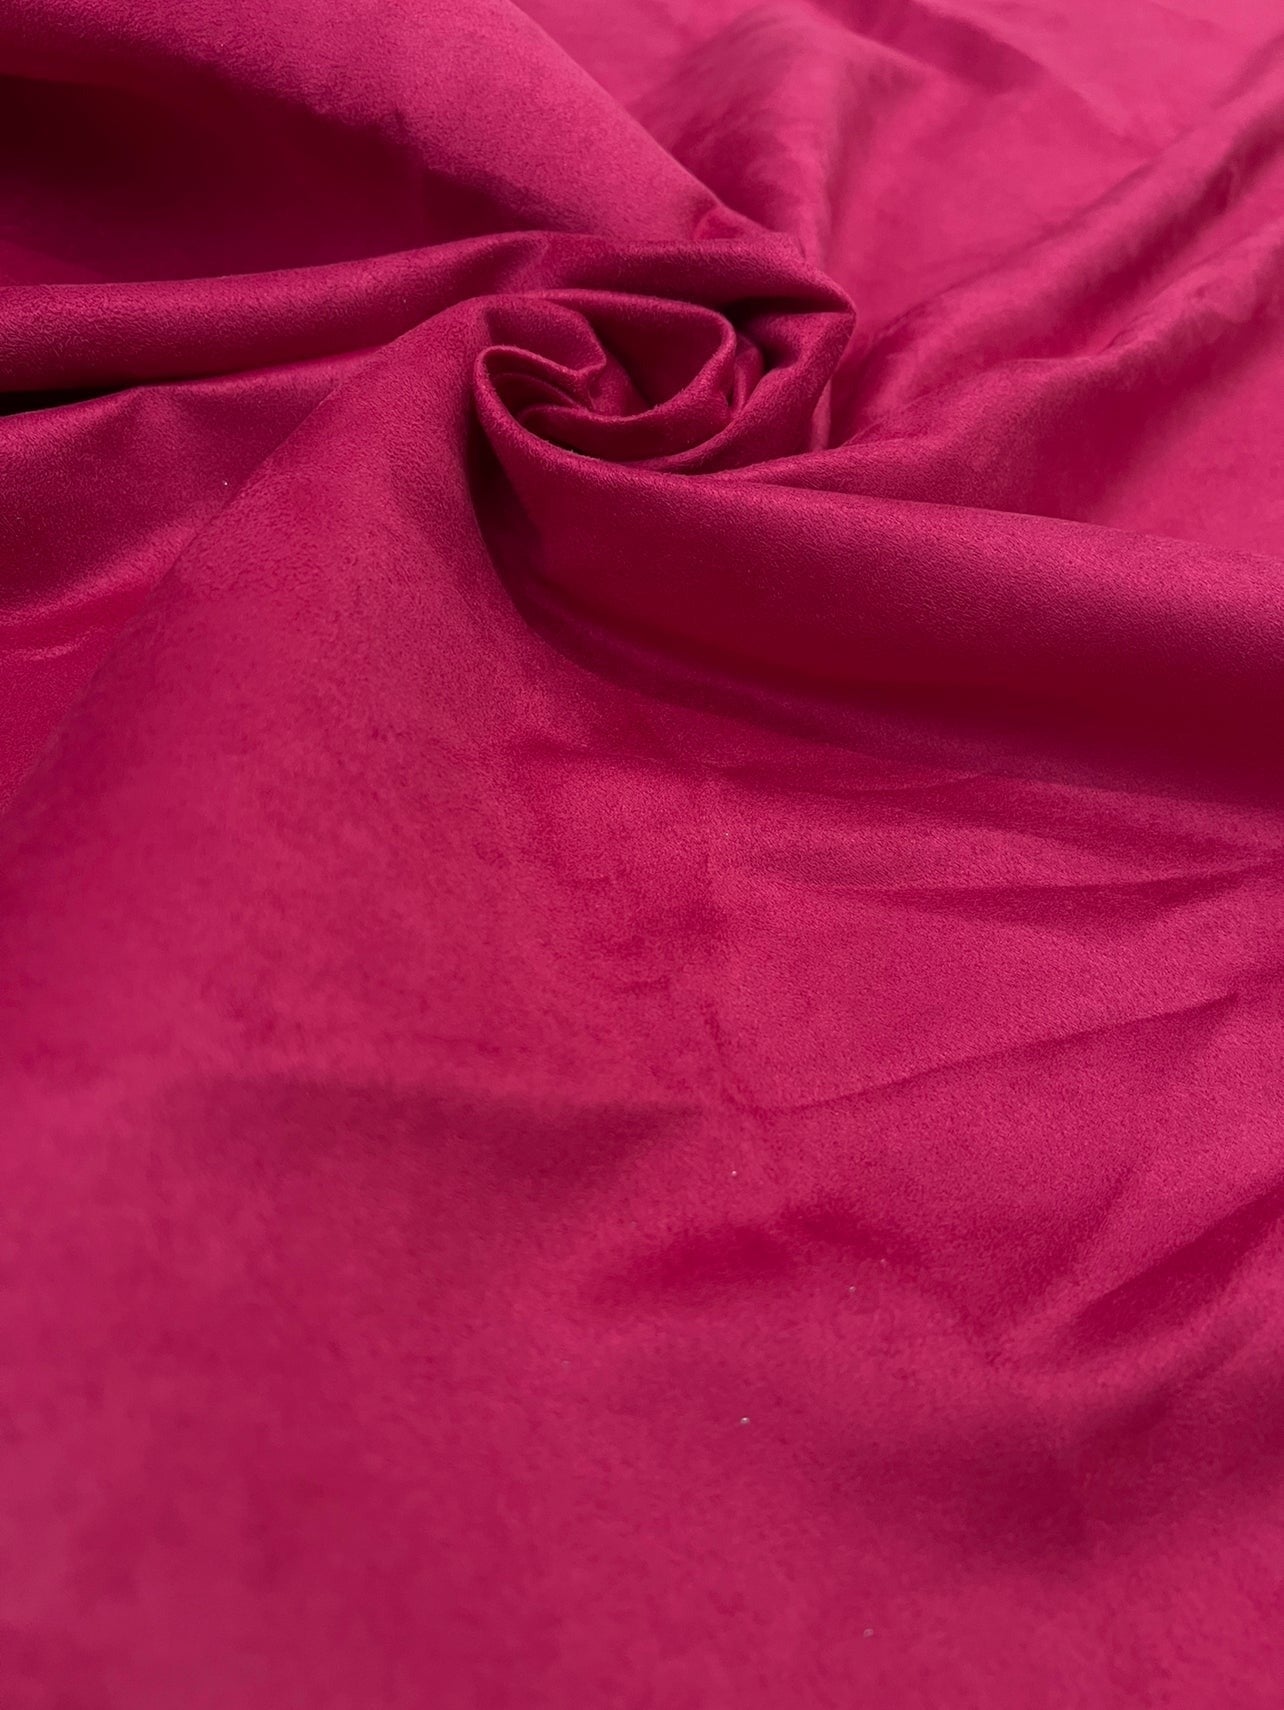 fuchsia Microsuede, pink microsuede, rose pink microsuede, premium microsuede, microsuede for sofa, microsuede for jackets, microsuede in low price, microsuede on discount, microsuede on sale, microsuede for apparels, microsuede for furniture